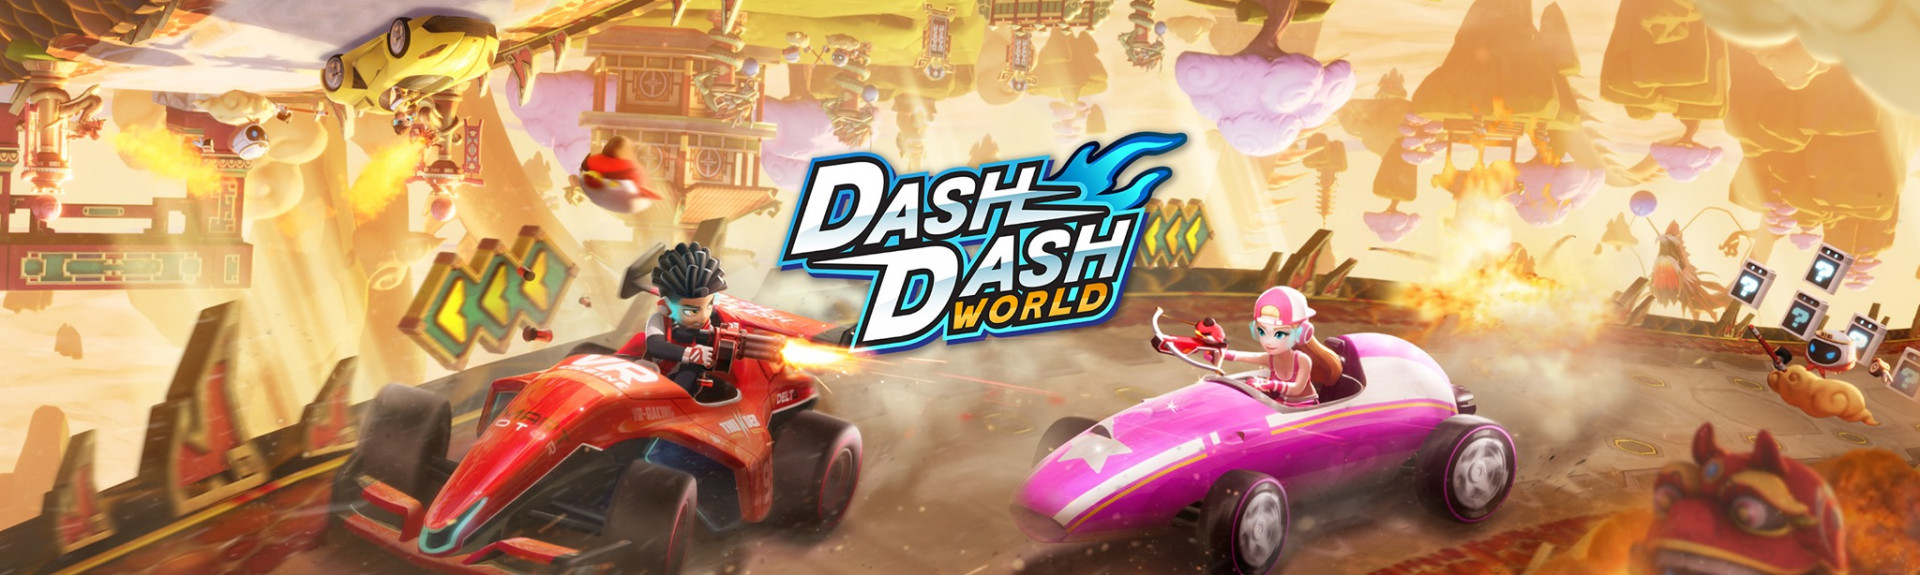 Dash Dash World: ANÁLISIS